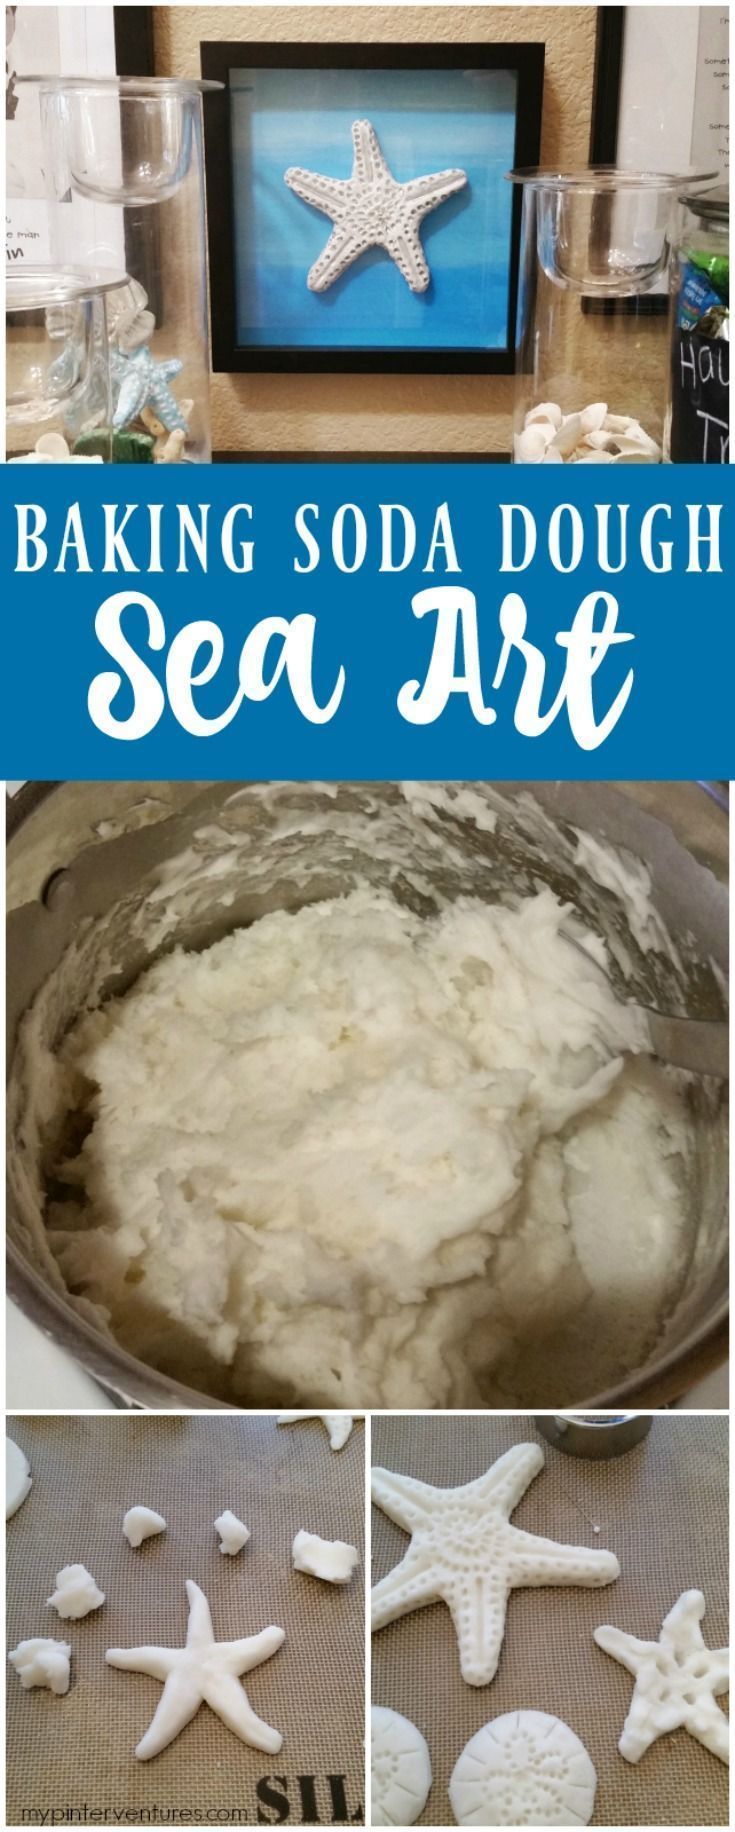 Baking Soda Dough -   14 diy projects To Try baking soda ideas